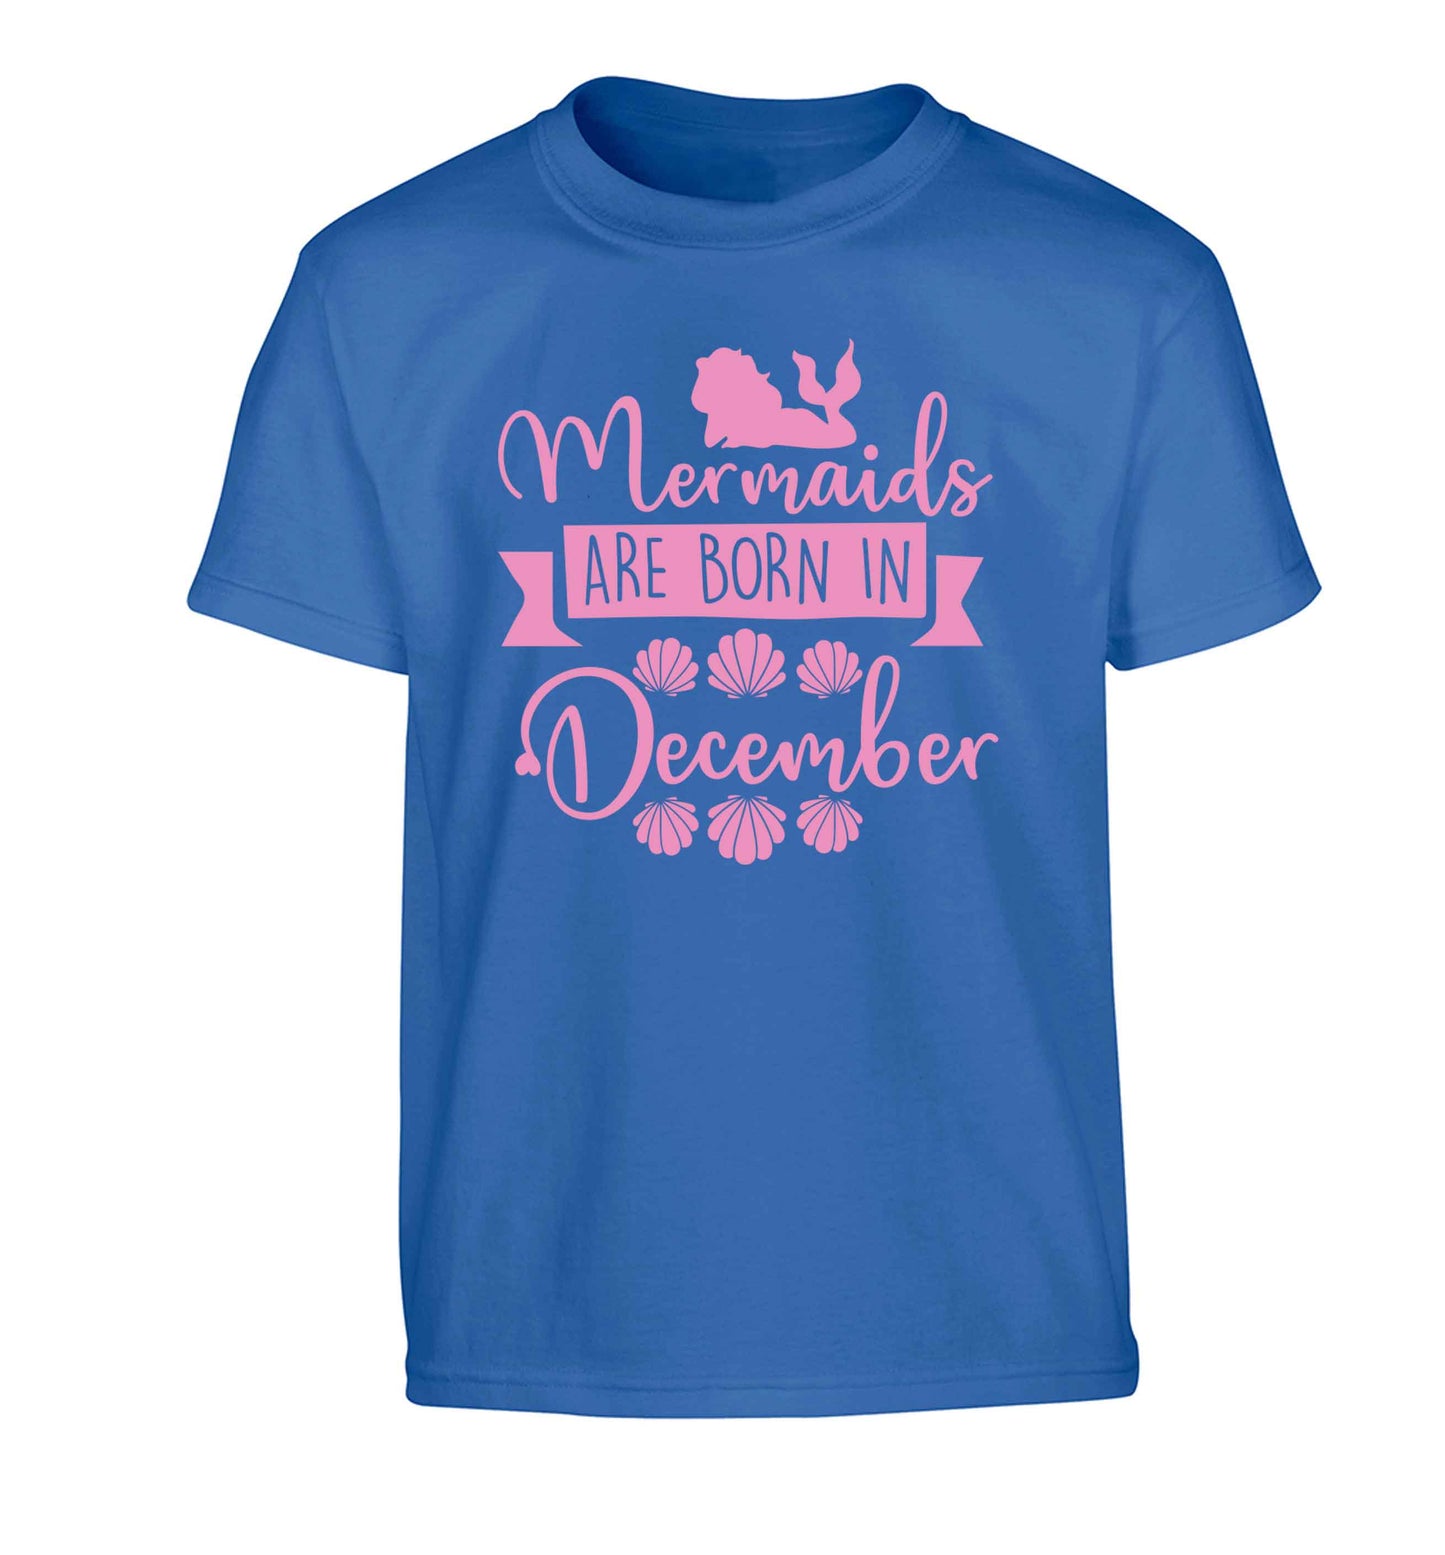 Mermaids are born in December Children's blue Tshirt 12-13 Years